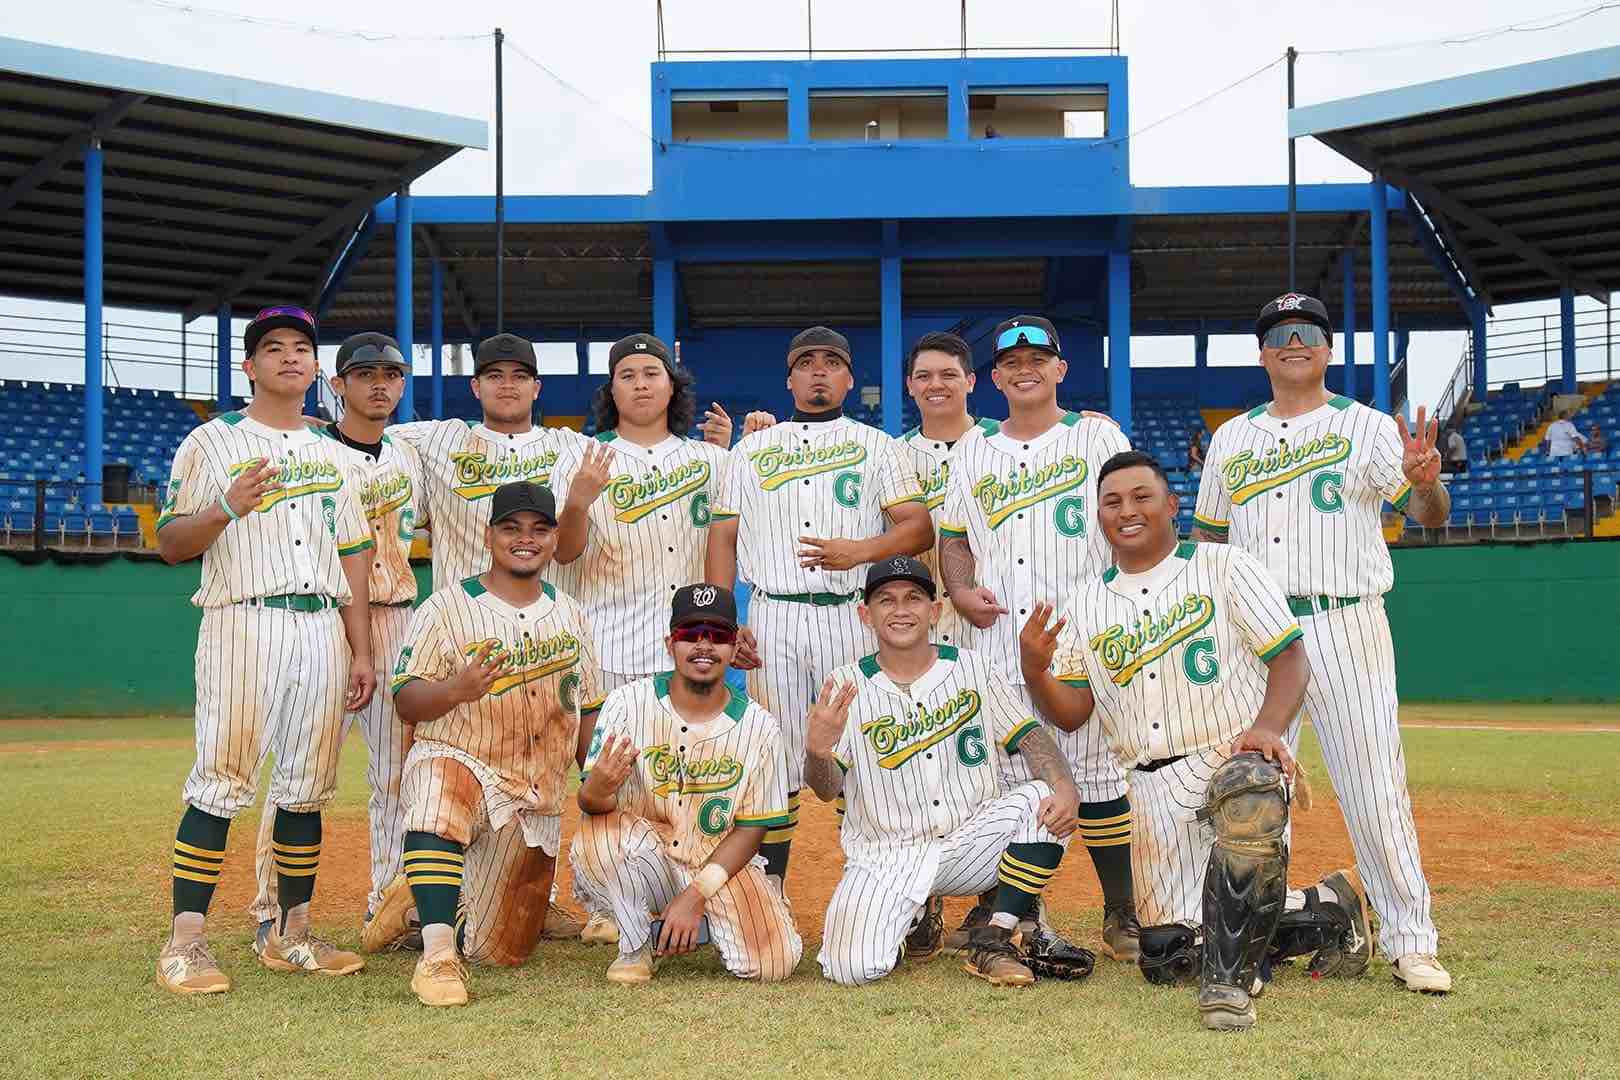 Tritons Baseball Team, June 2022